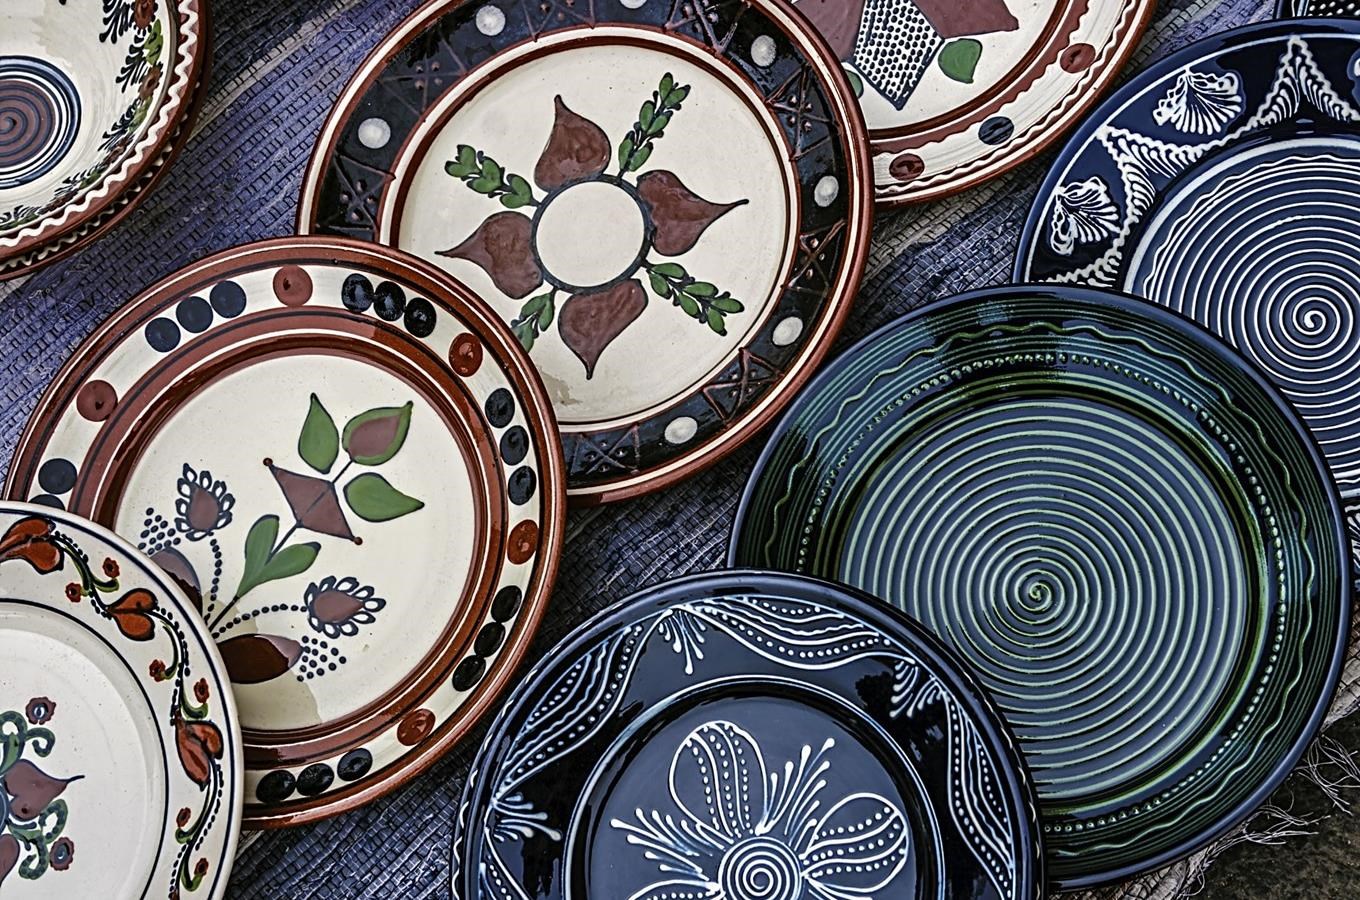 Muzeum berounské keramiky v Berouně